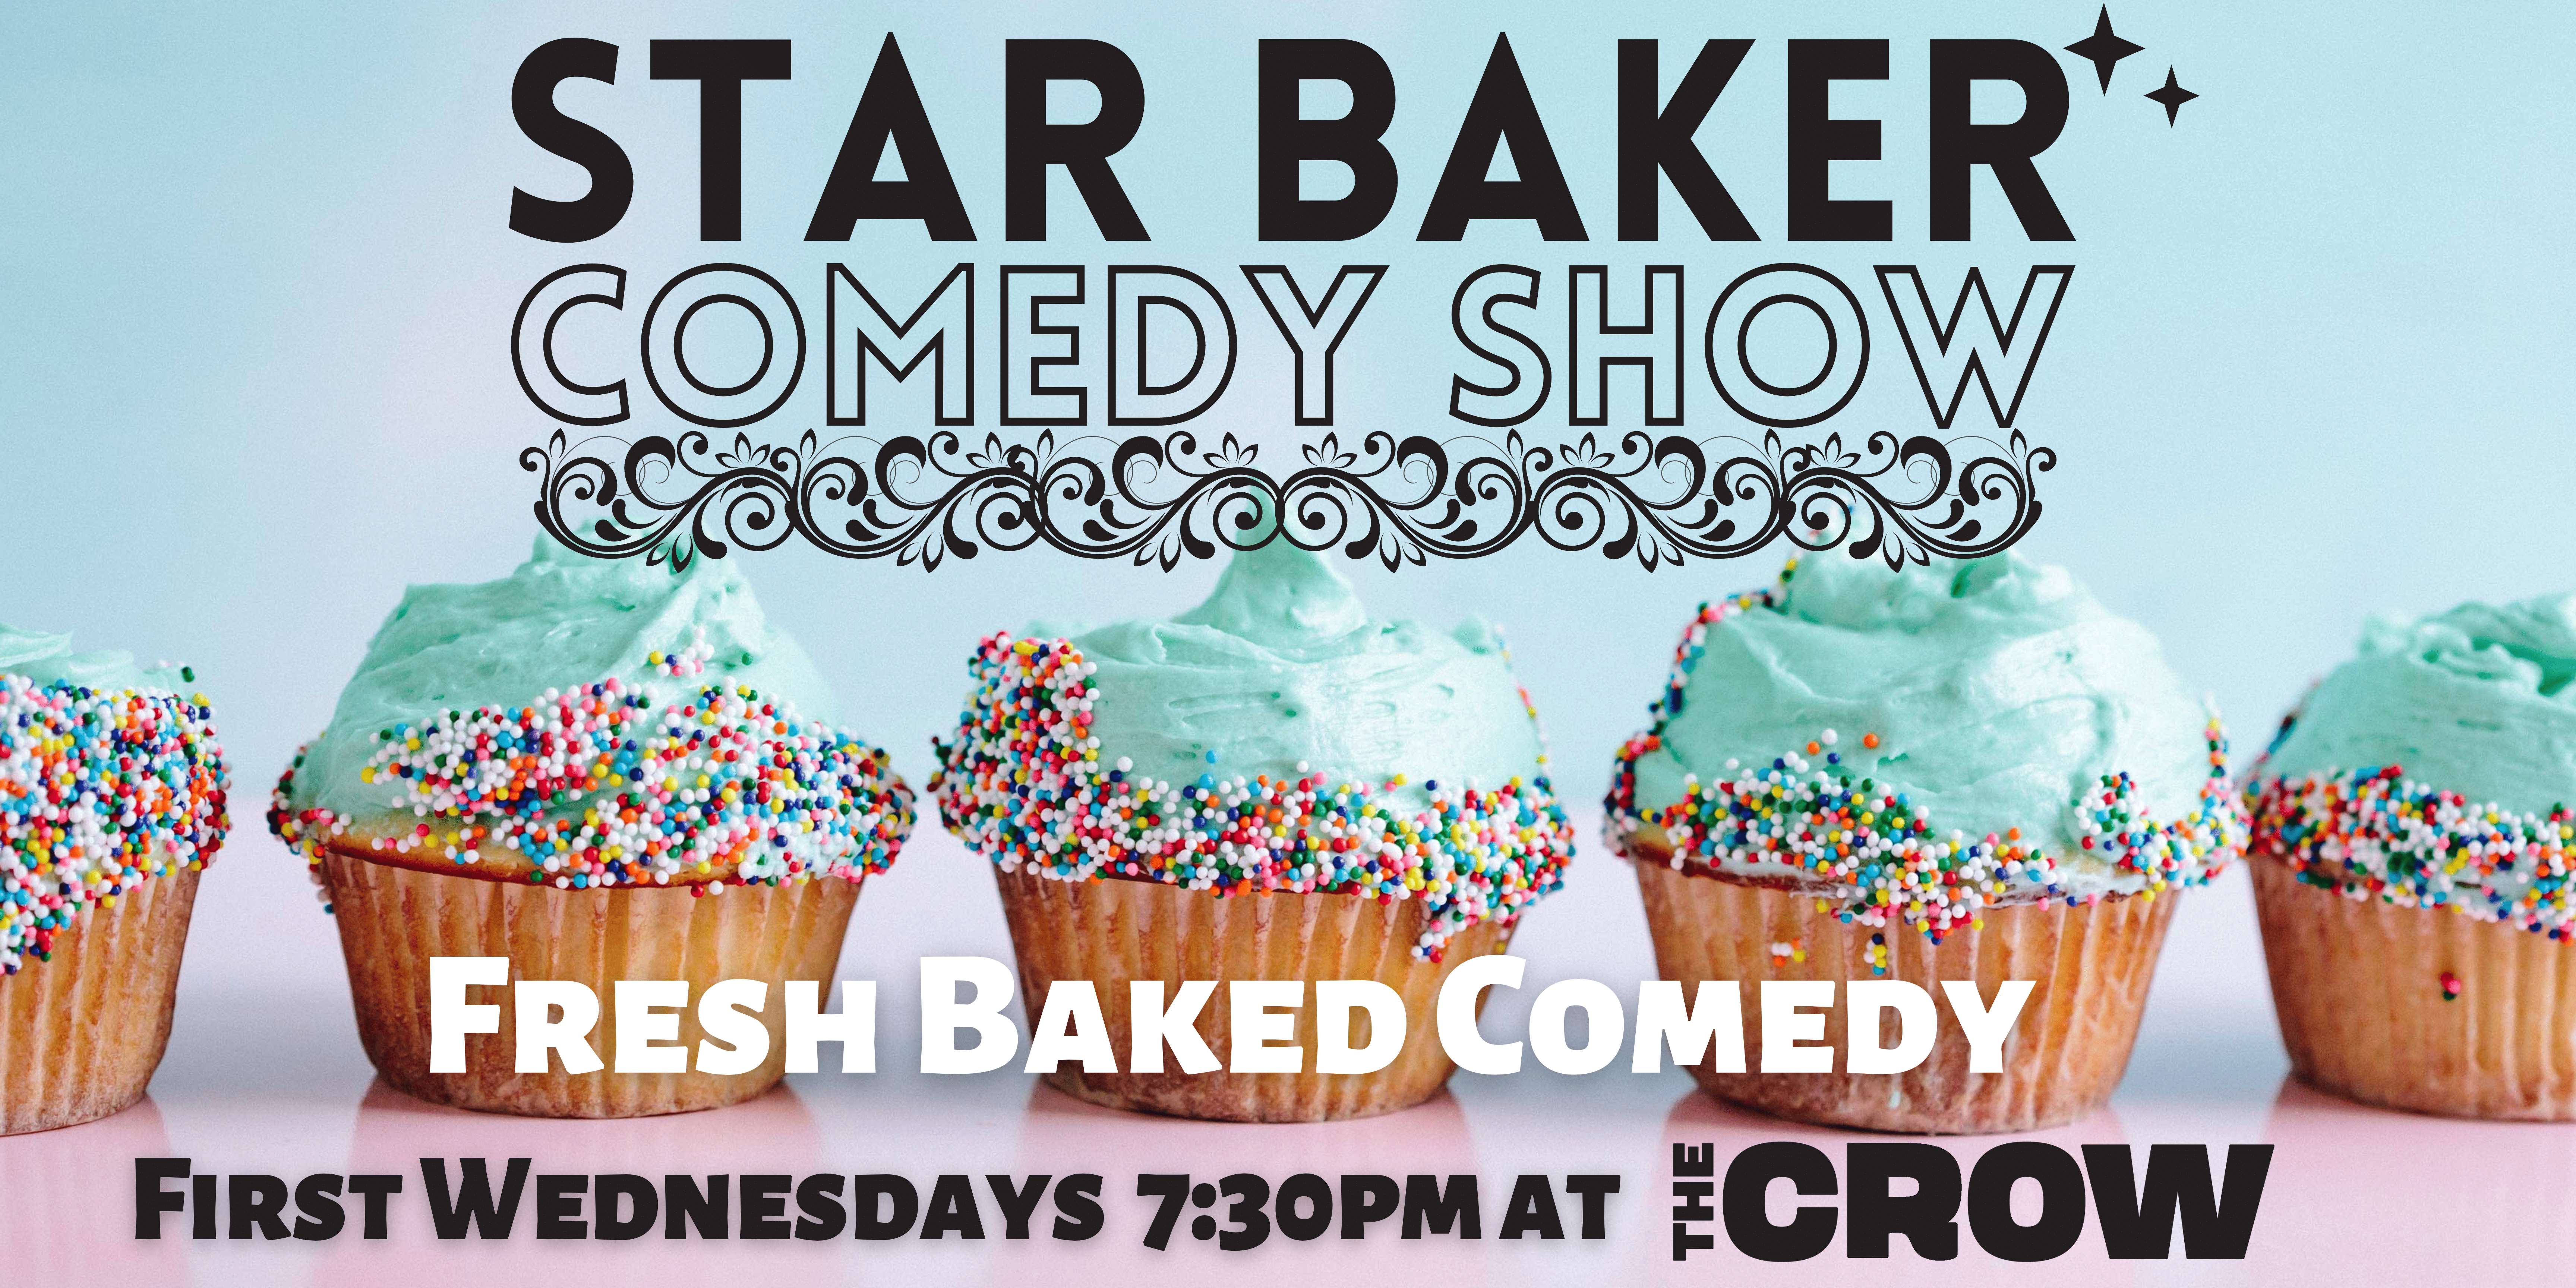 Star Baker Comedy Show